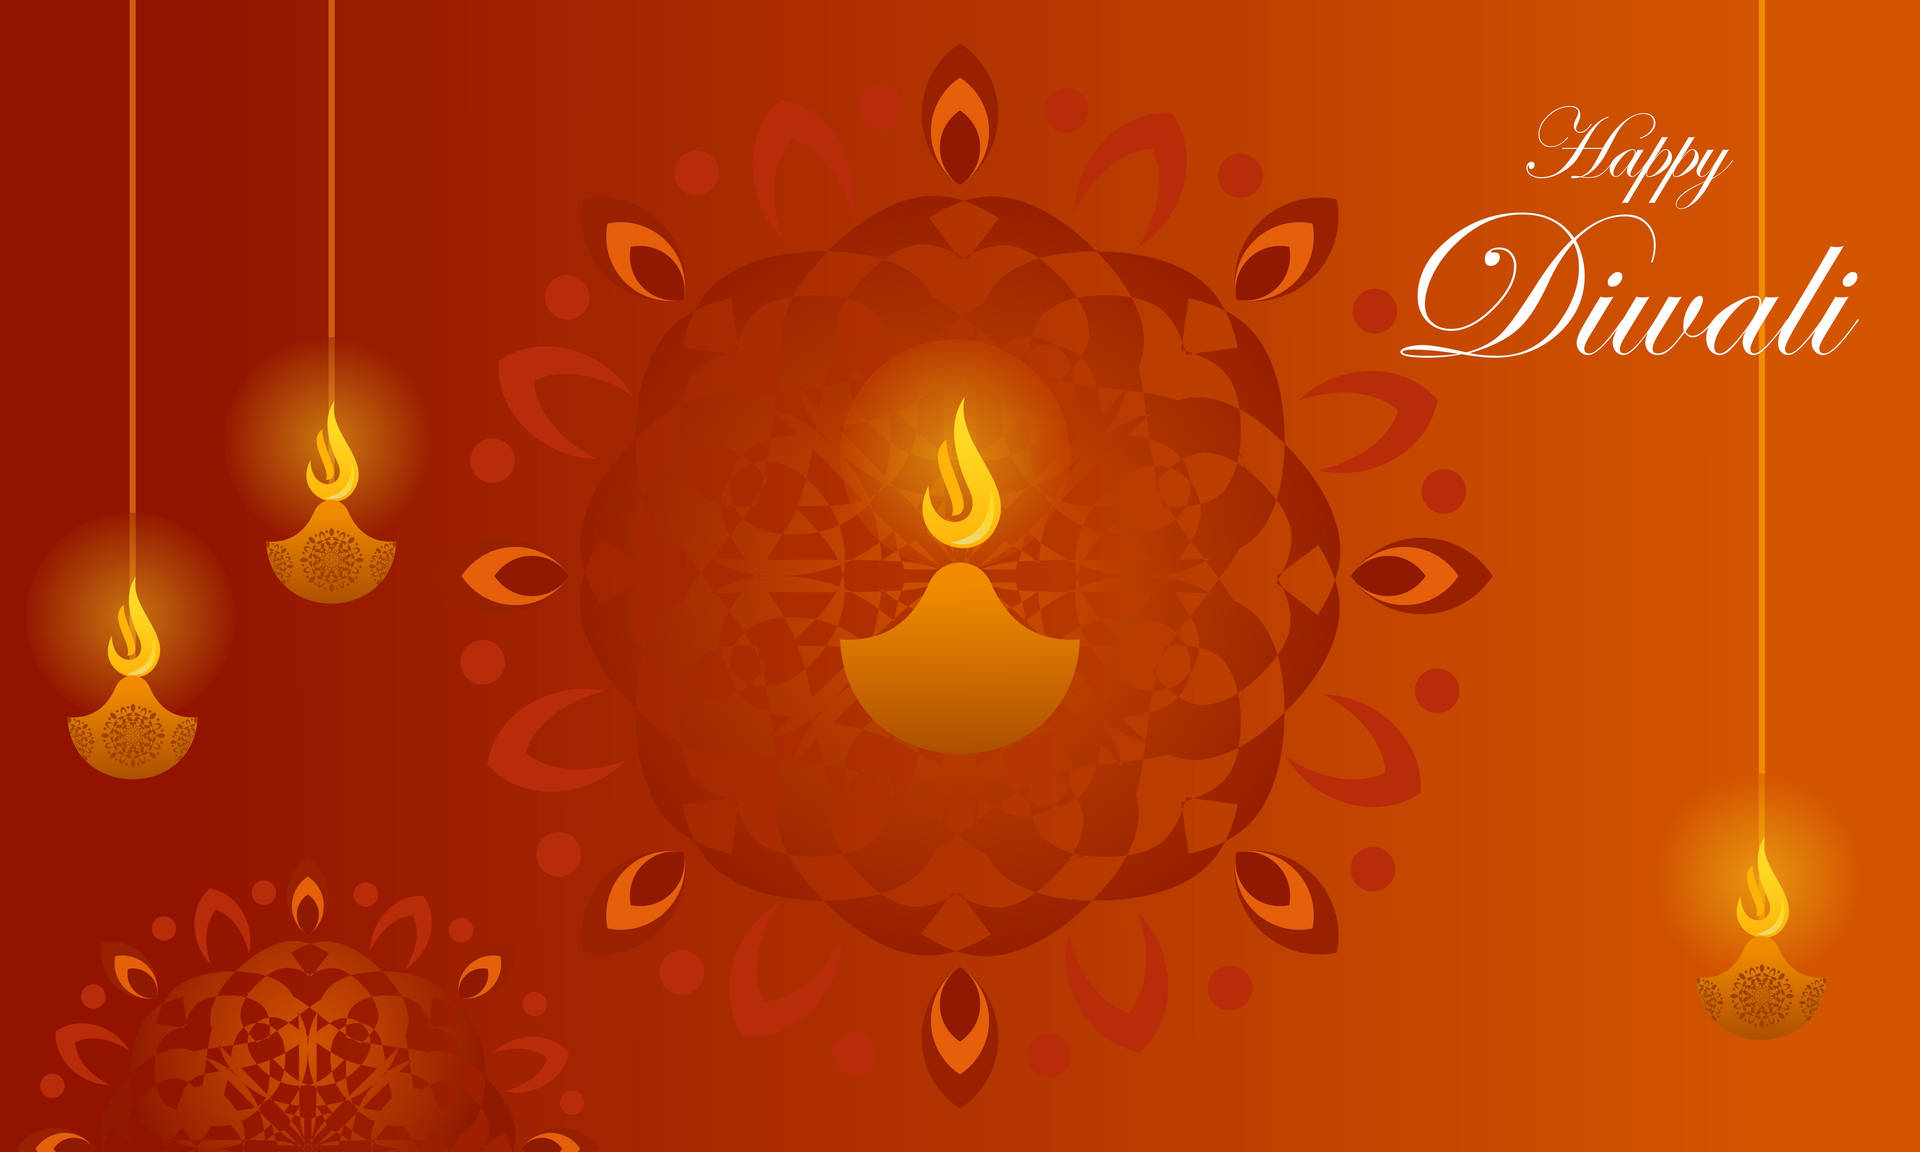 Happy Diwali Orange Oil Lamps